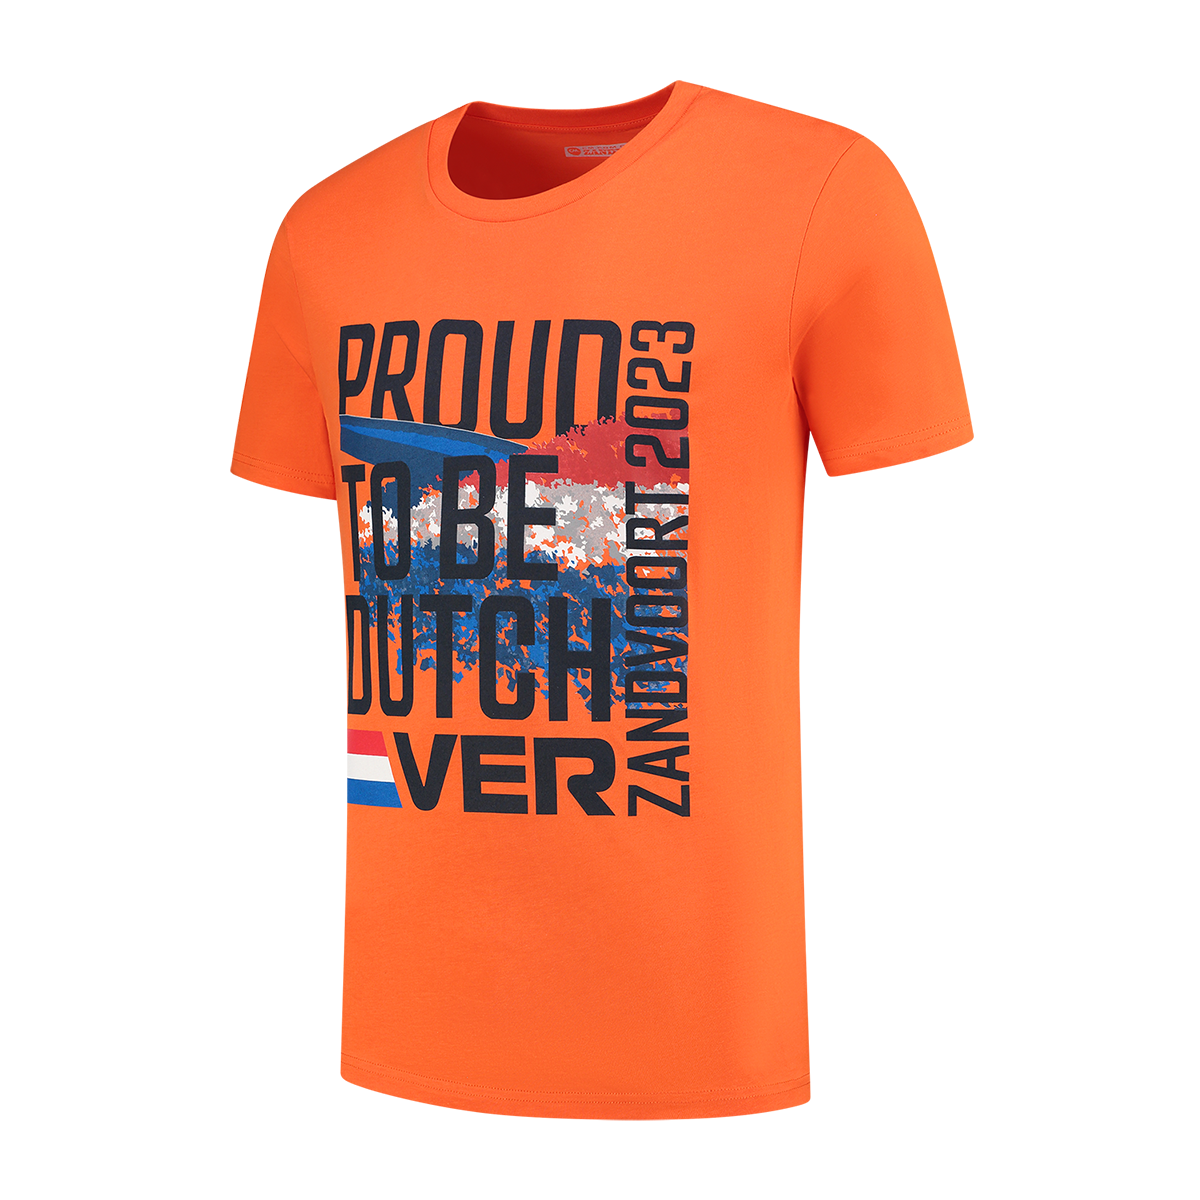 Proud to be Dutch - T-shirt Oranje - S - Max Verstappen